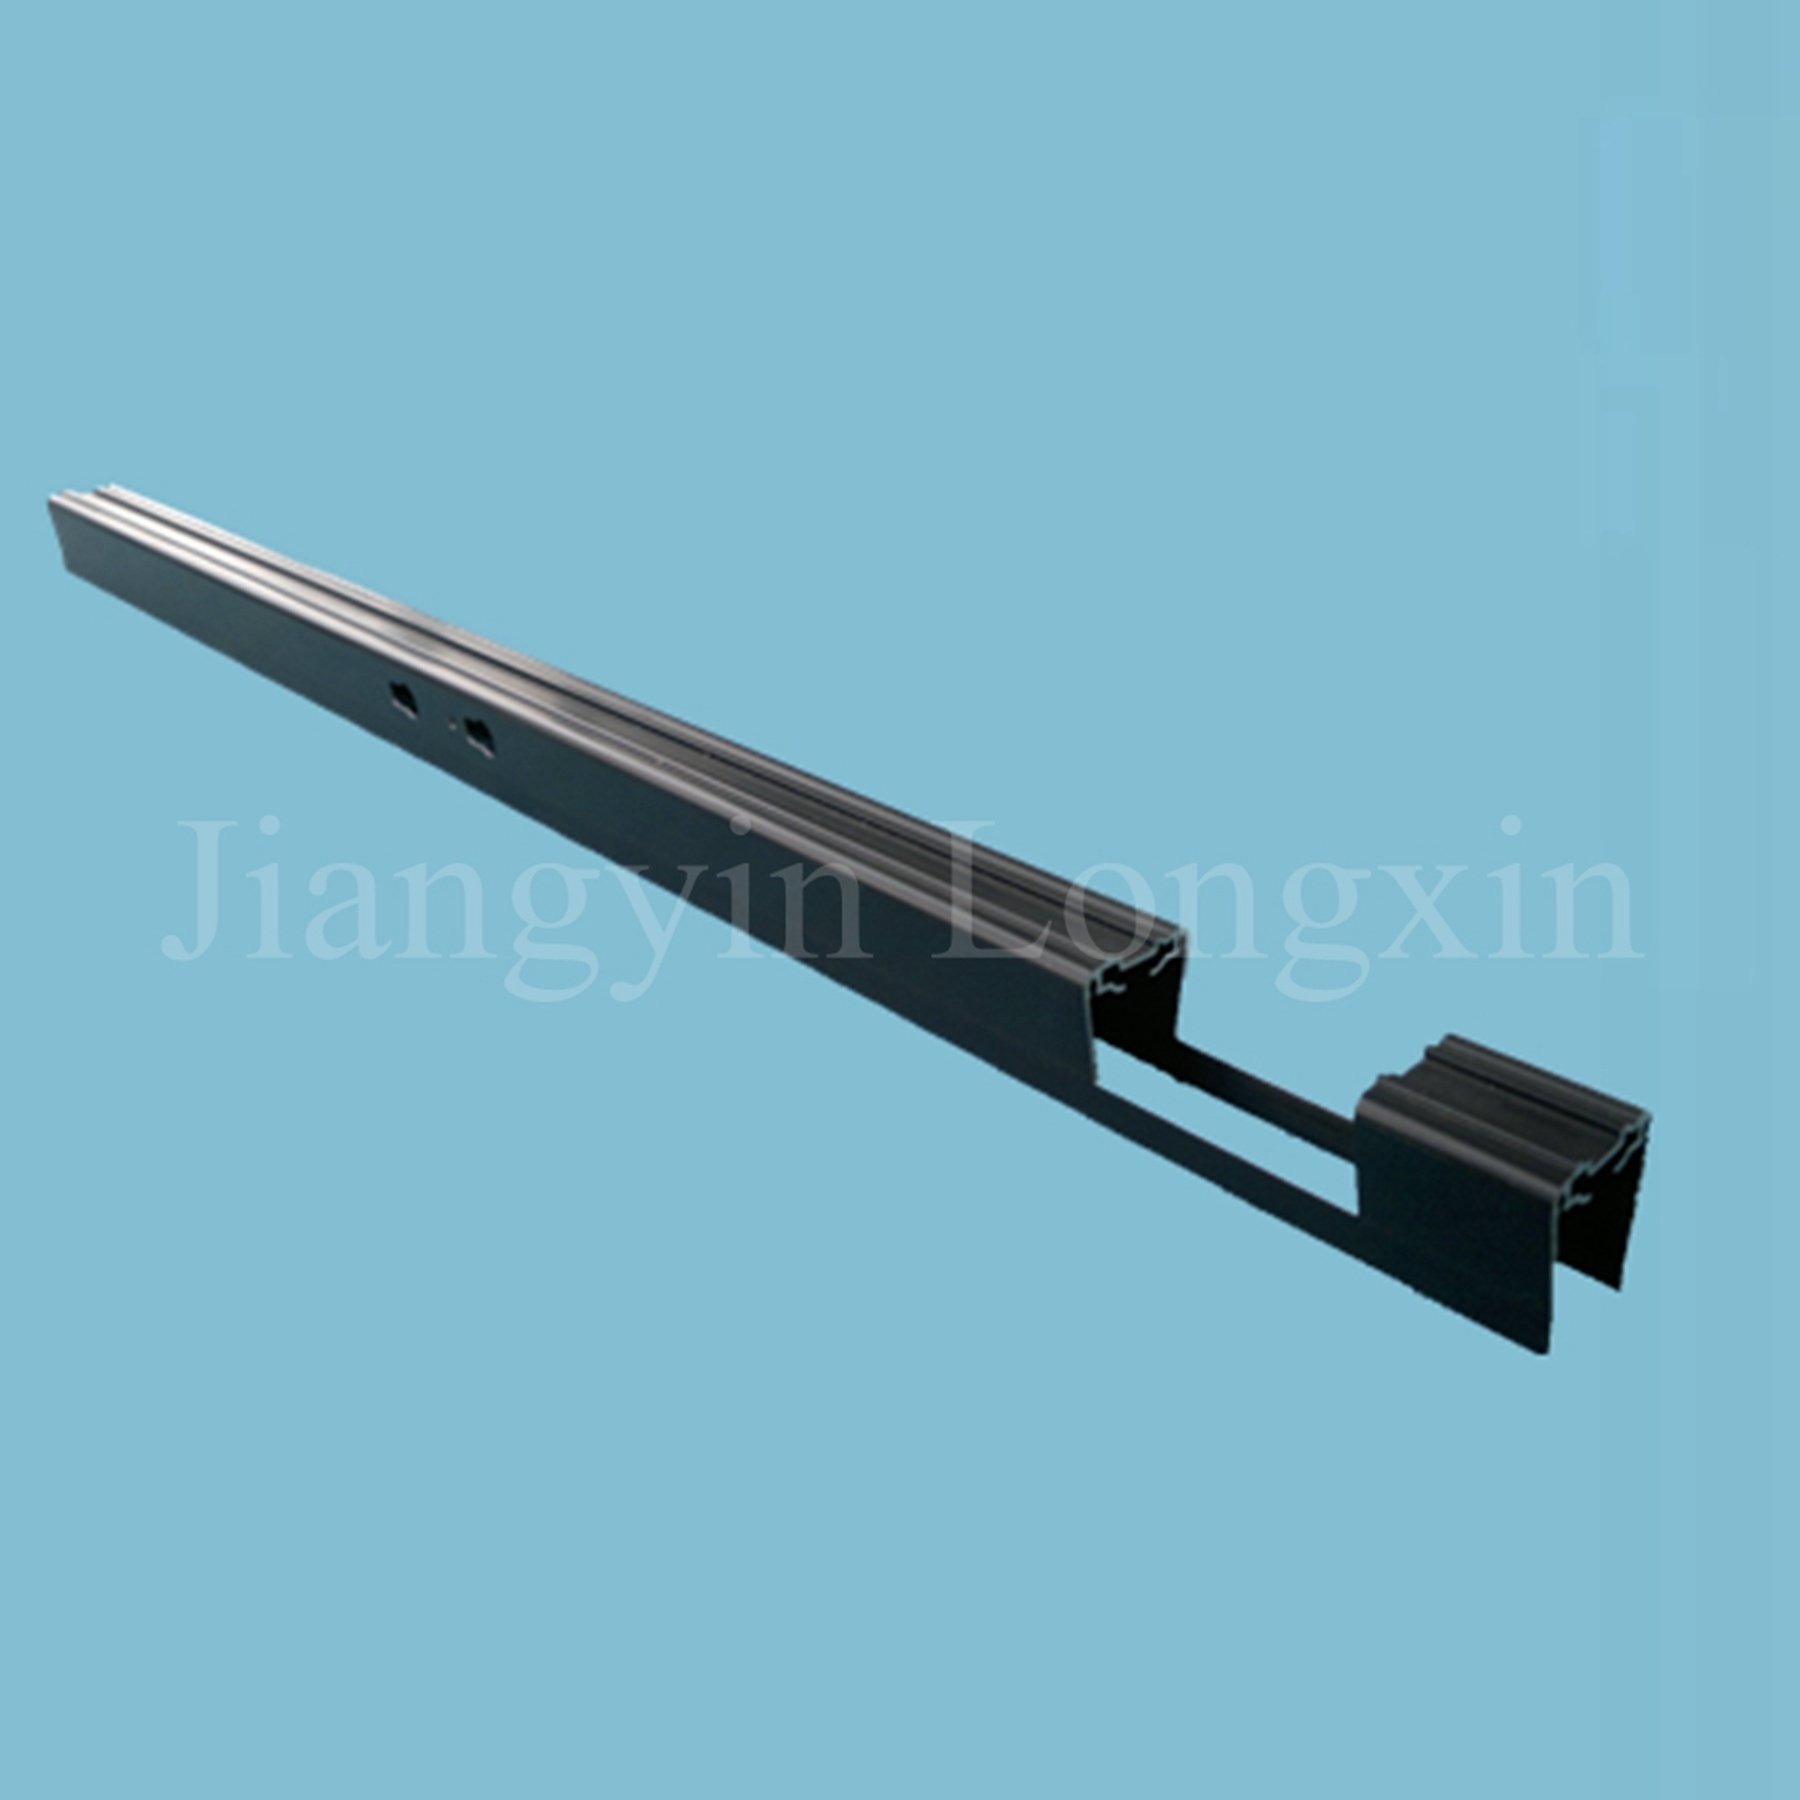 Black Anodized Aluminium Profile for Curtain with Machining